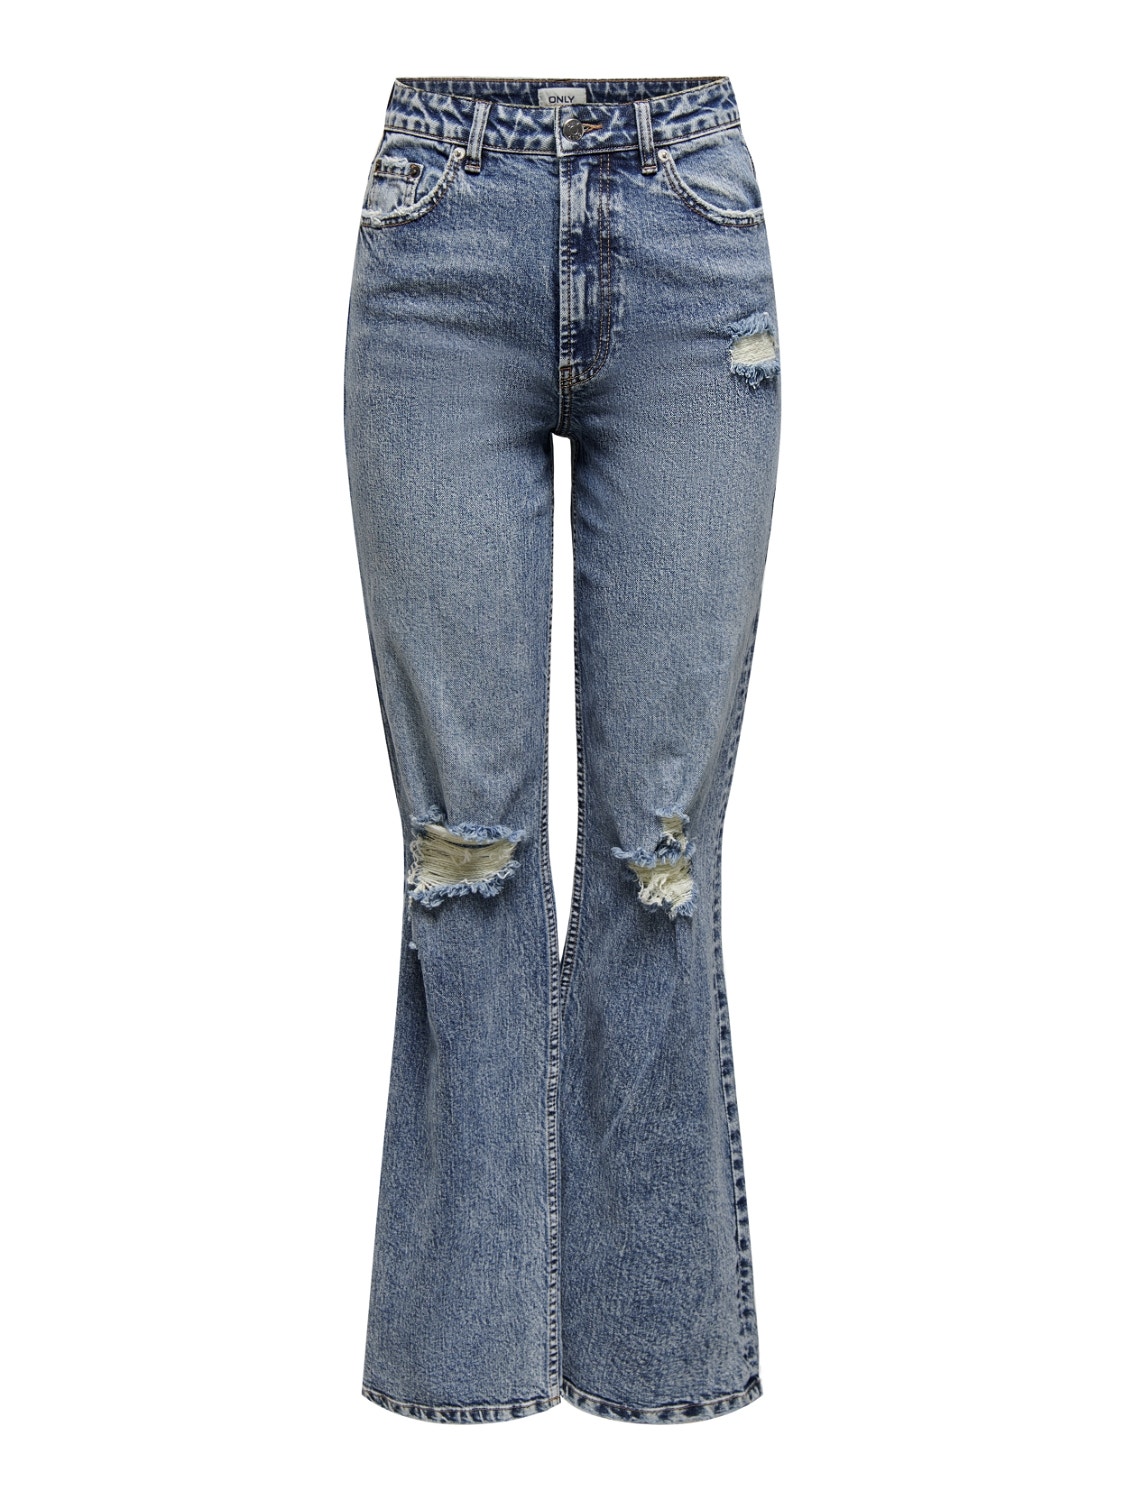 ONLY Gerade geschnitten Hohe Taille Offener Saum Jeans -Medium Blue Denim - 15256490